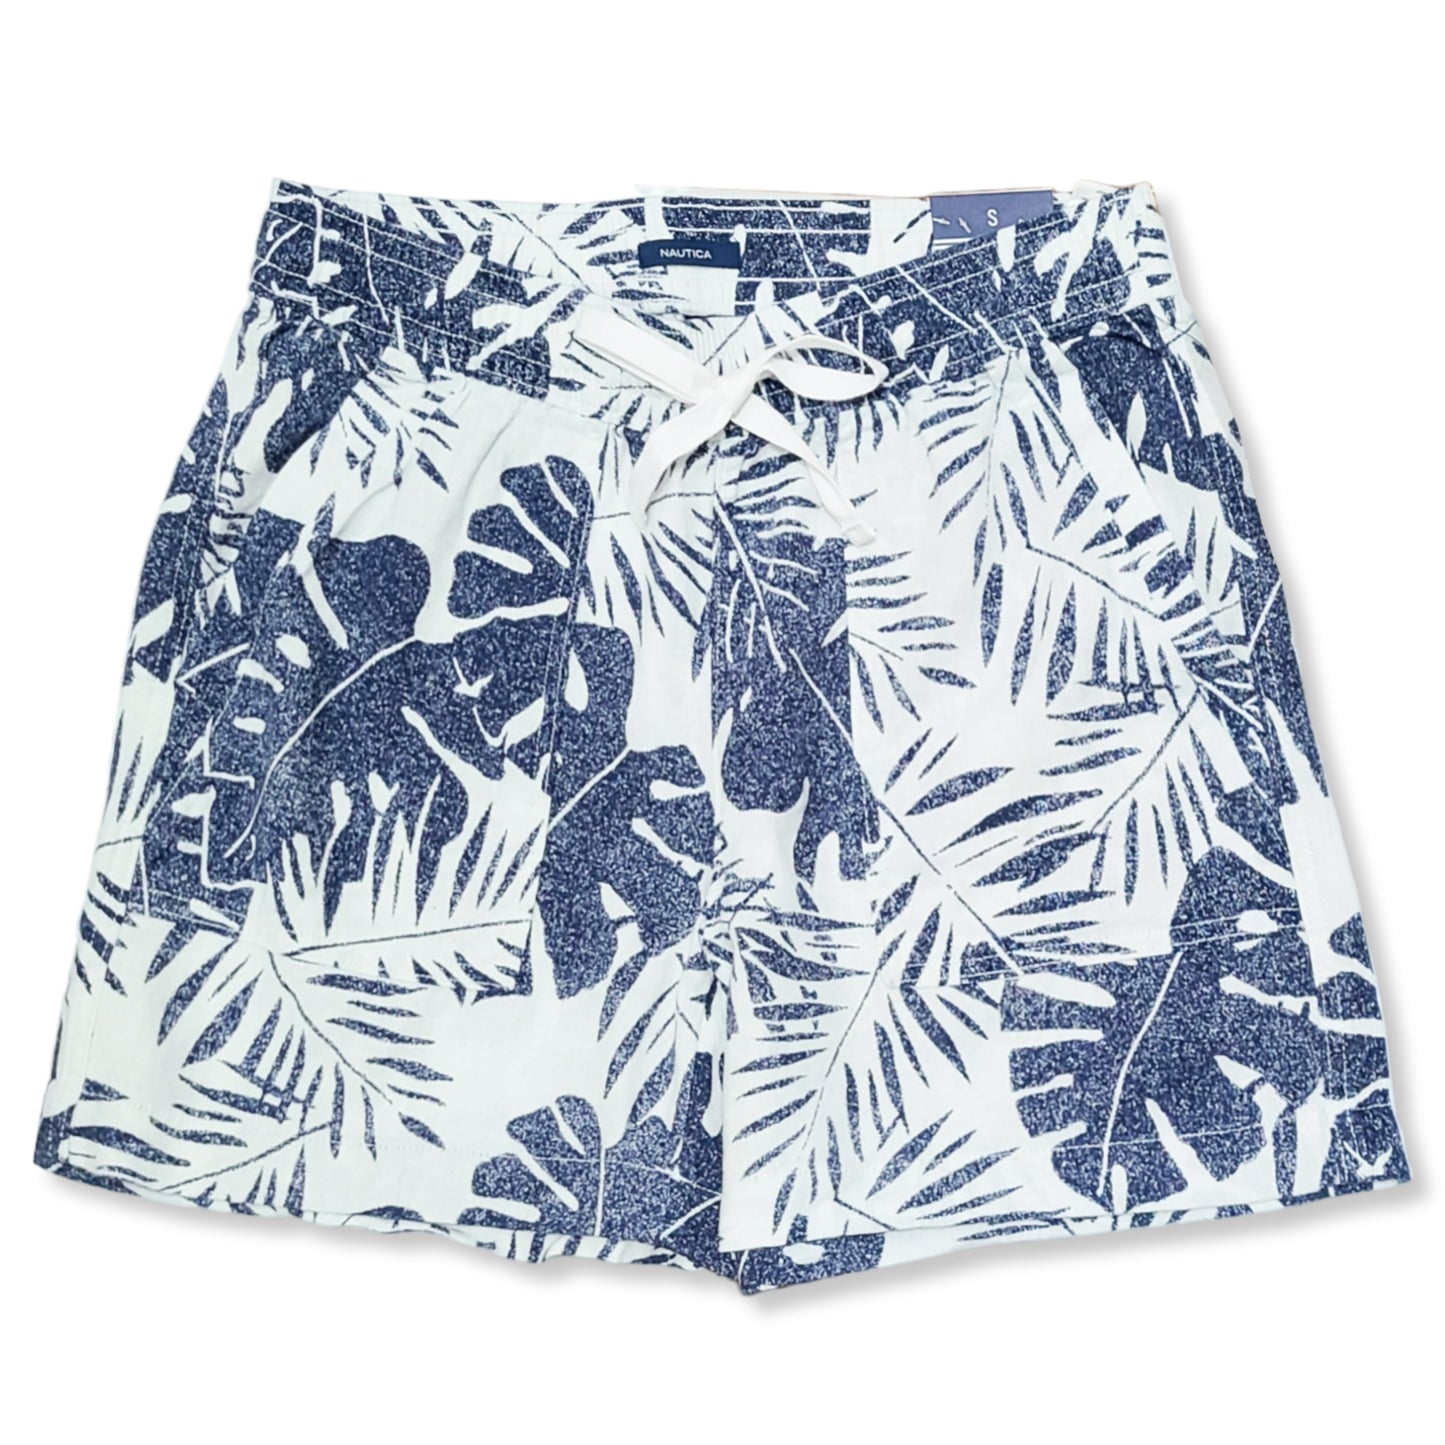 Nautica Women's Linen Blend Side Pockets Elastic Drawstring Casual Shorts